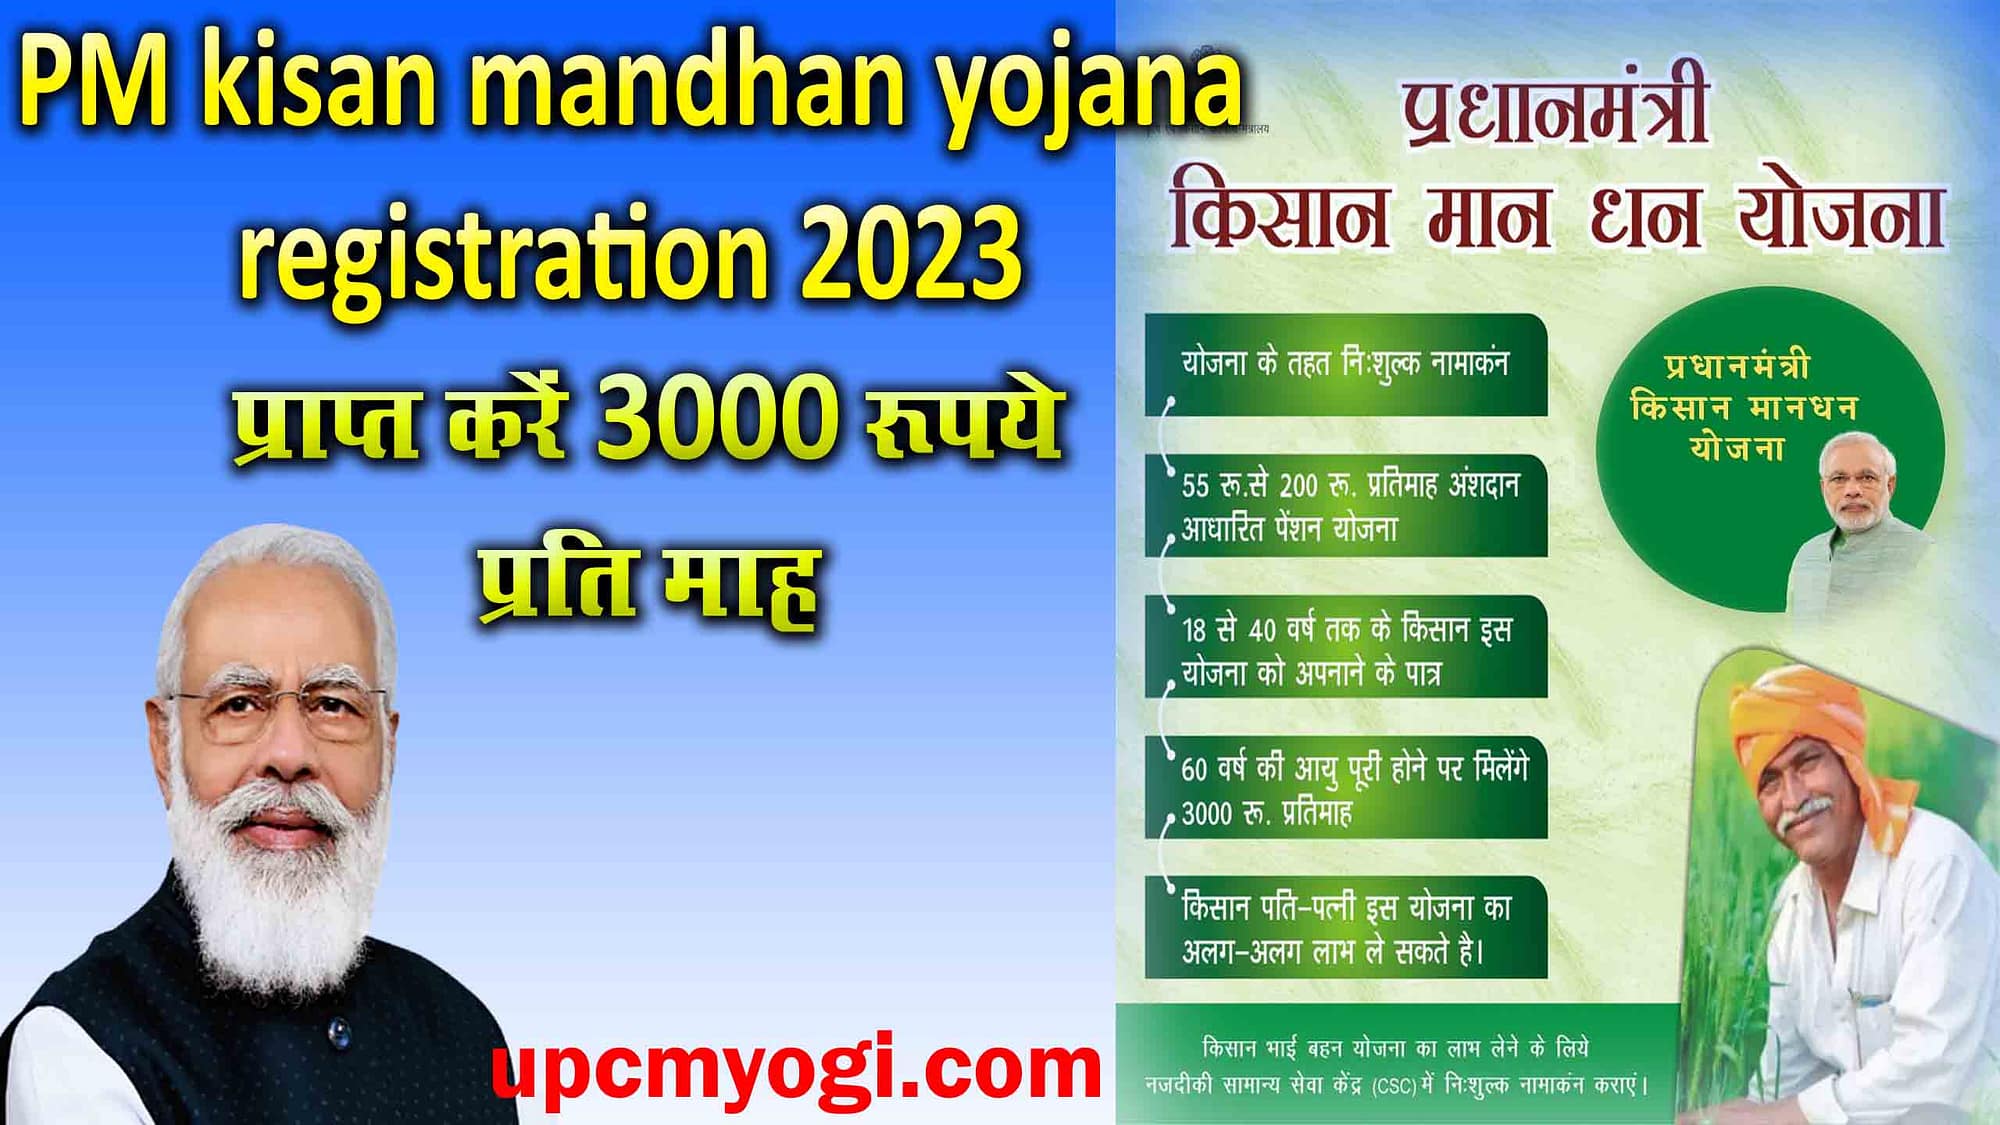 PM kisan mandhan yojana apply online registration 2023